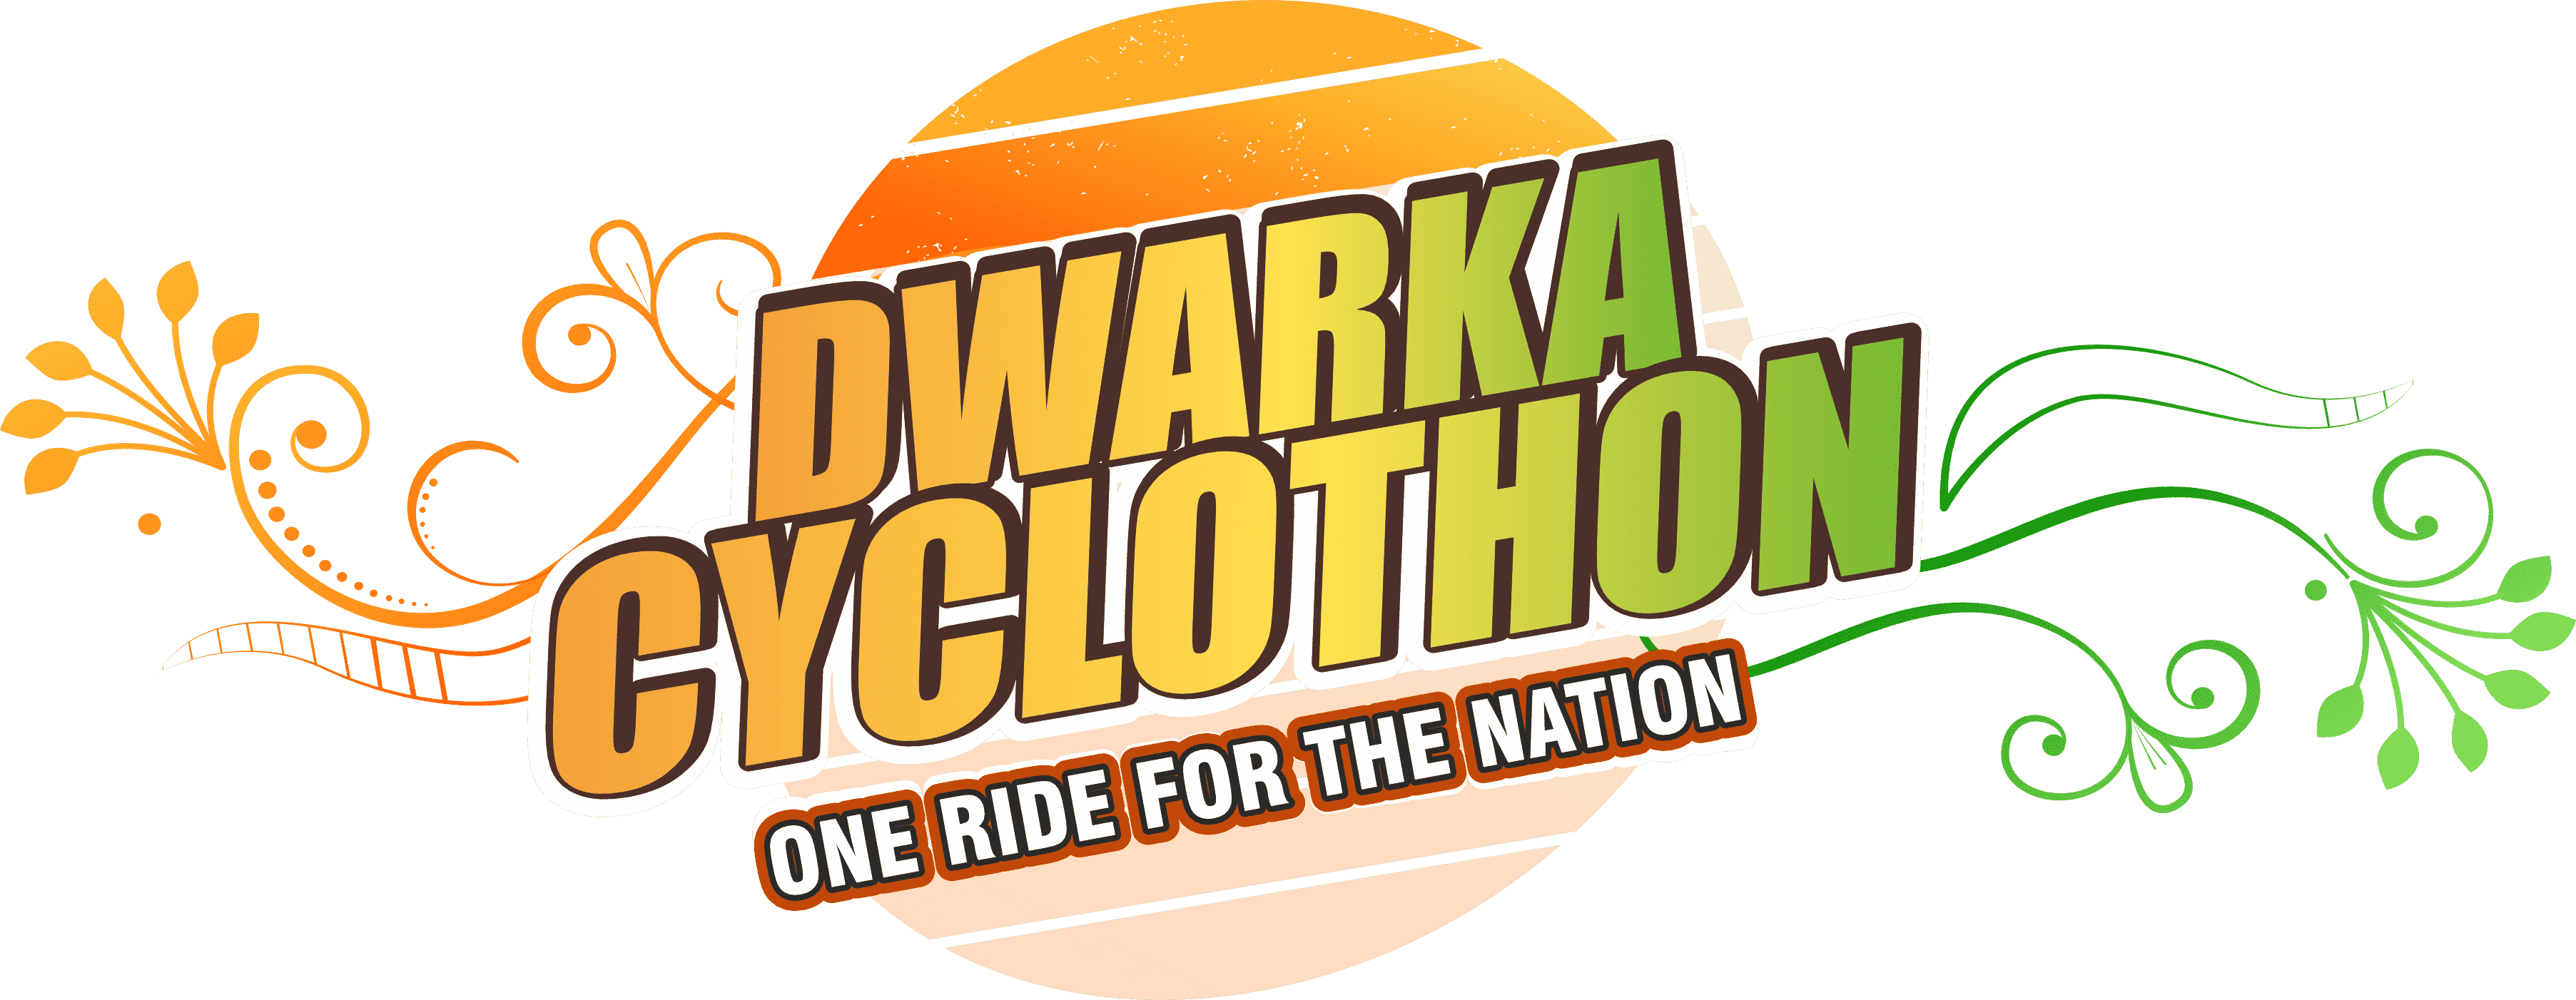 Dwarka Cyclothon logo